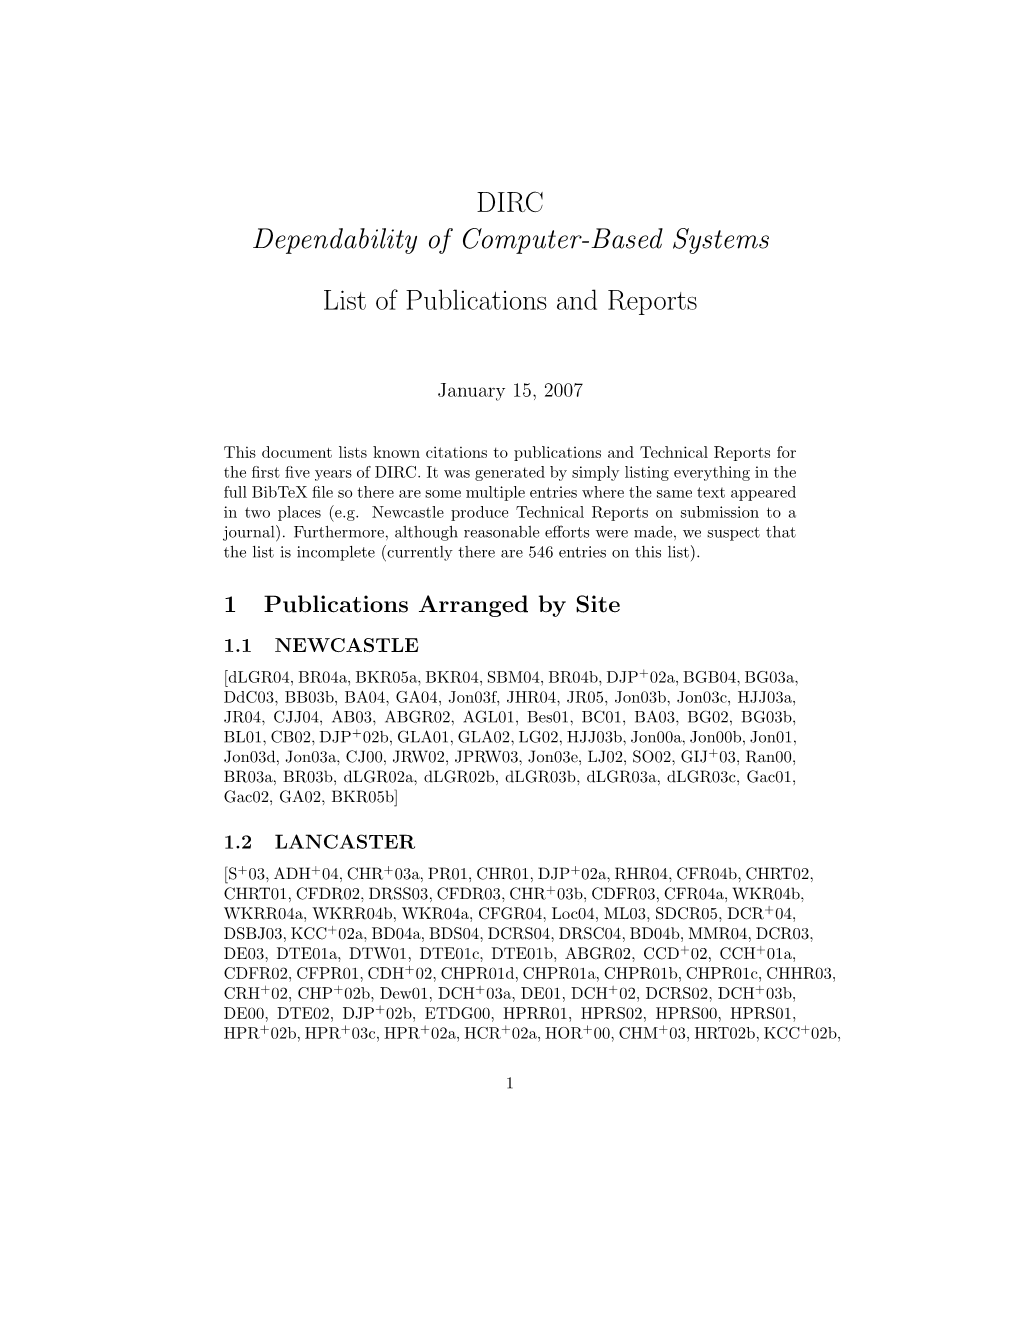 Full List of DIRC Publications